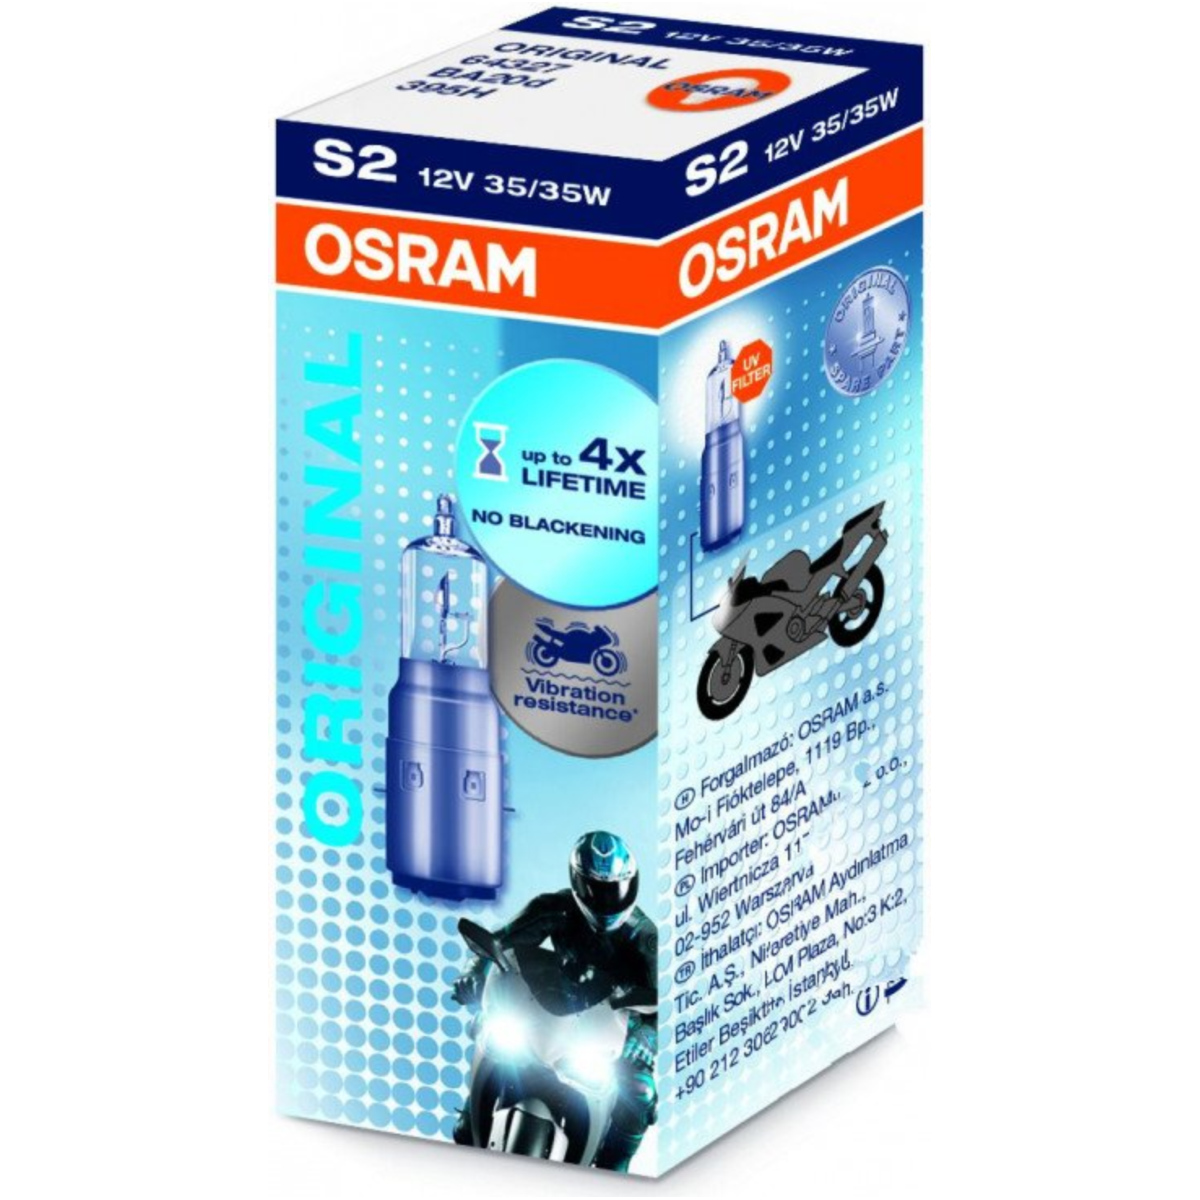 Osram 4052899136755 lampe s2 12v 35/35 watt von OSRAM